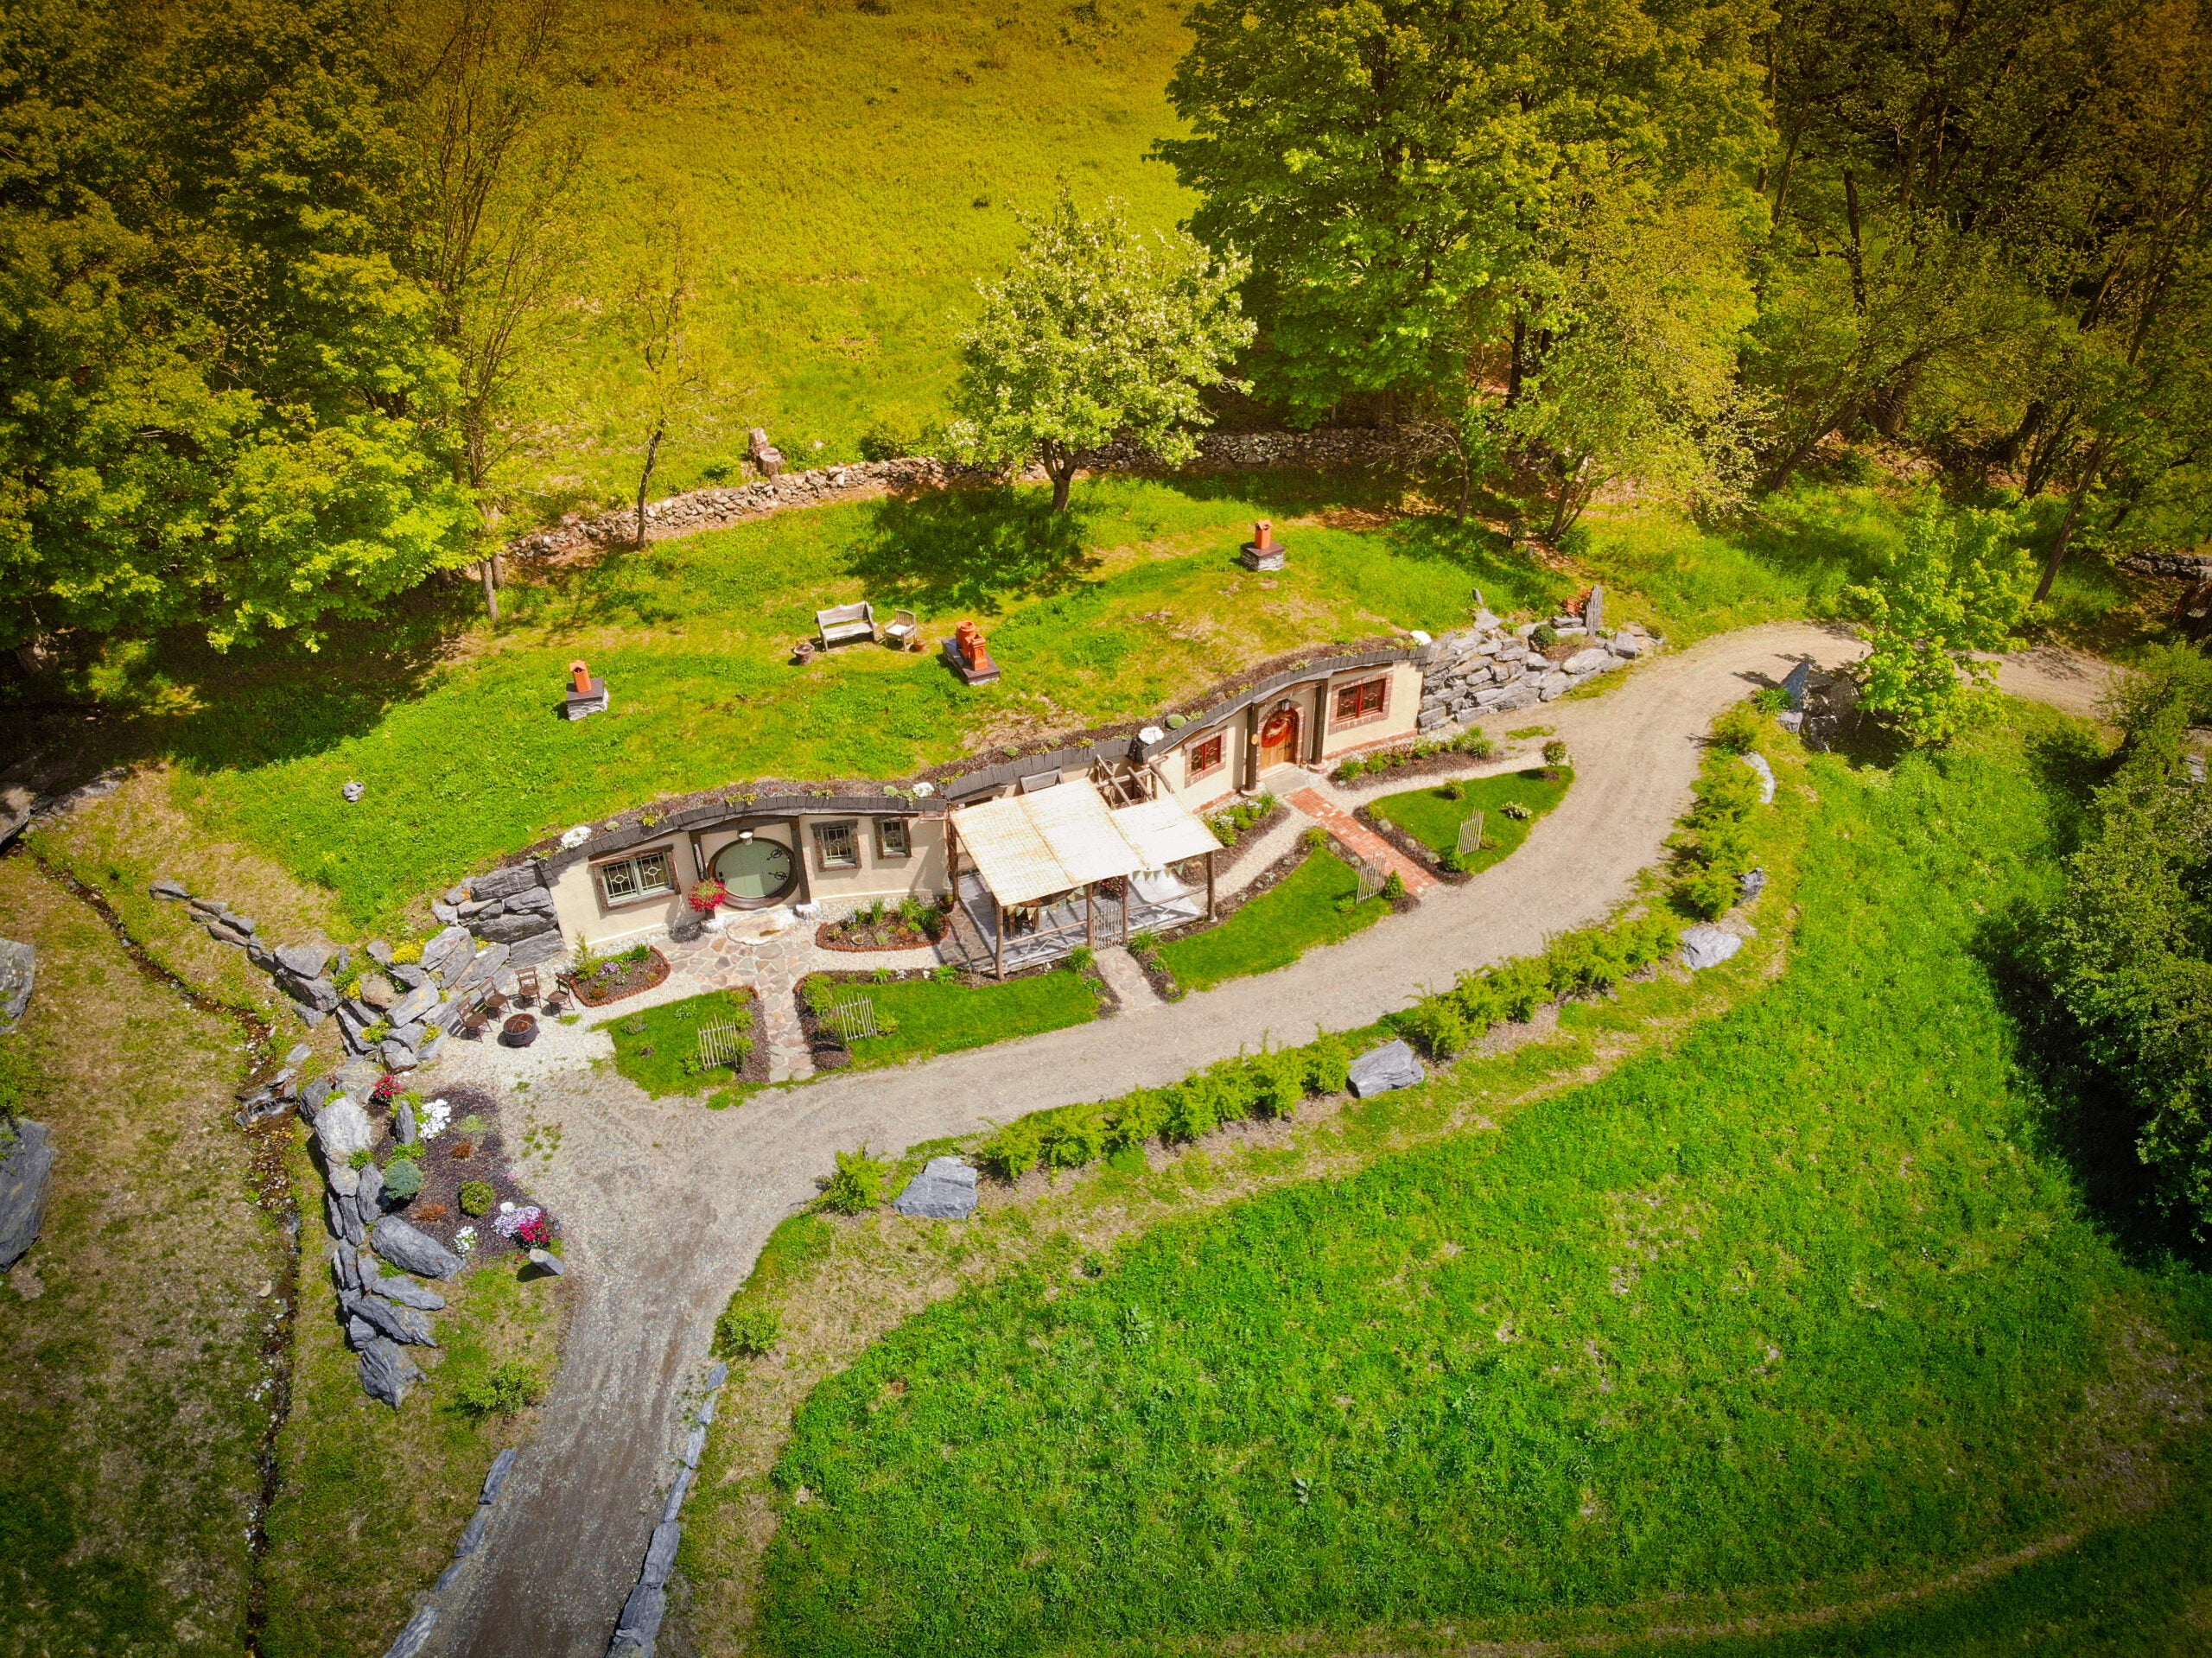 hobbit-house-vt-aerial-view